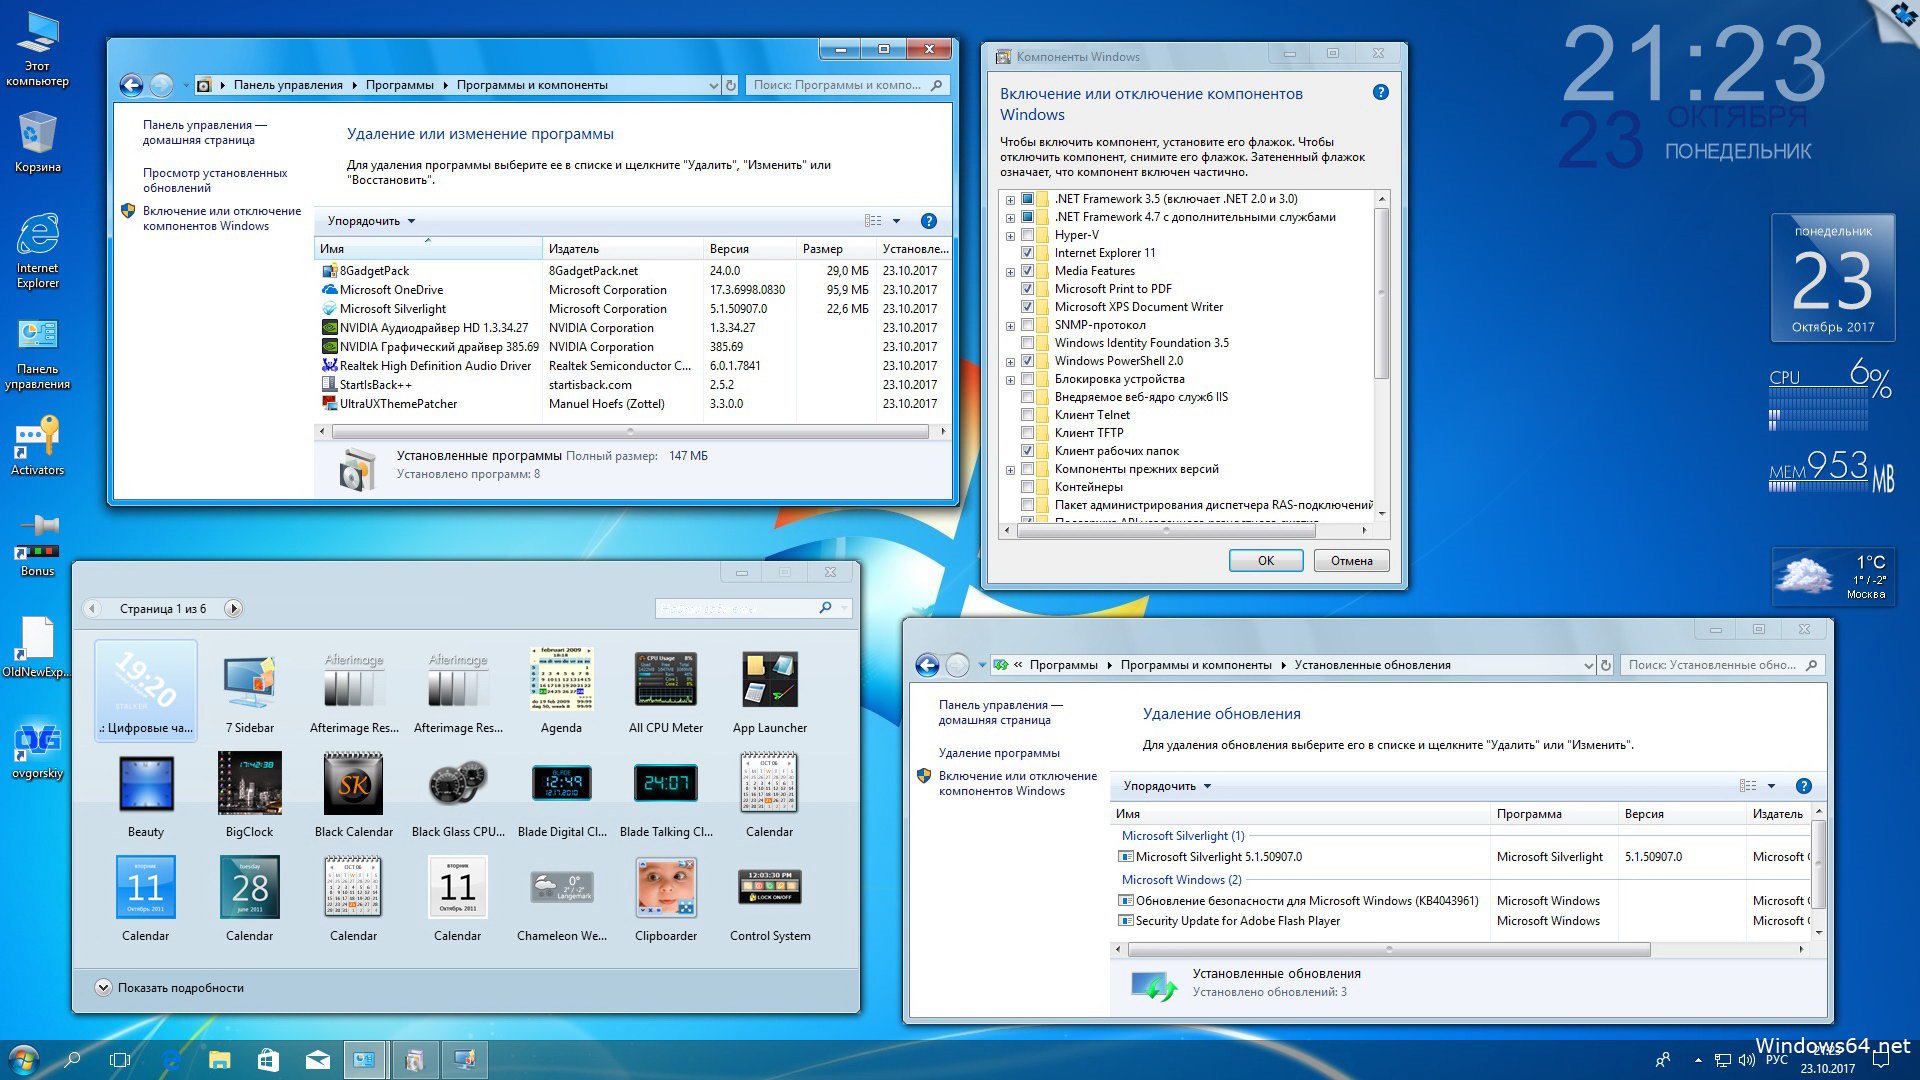 Виндовс 10 зверь. Виндовс 10 версия 1709. Библиотеки виндовс 10. Microsoft Windows 10. 8 Gadget Pack.